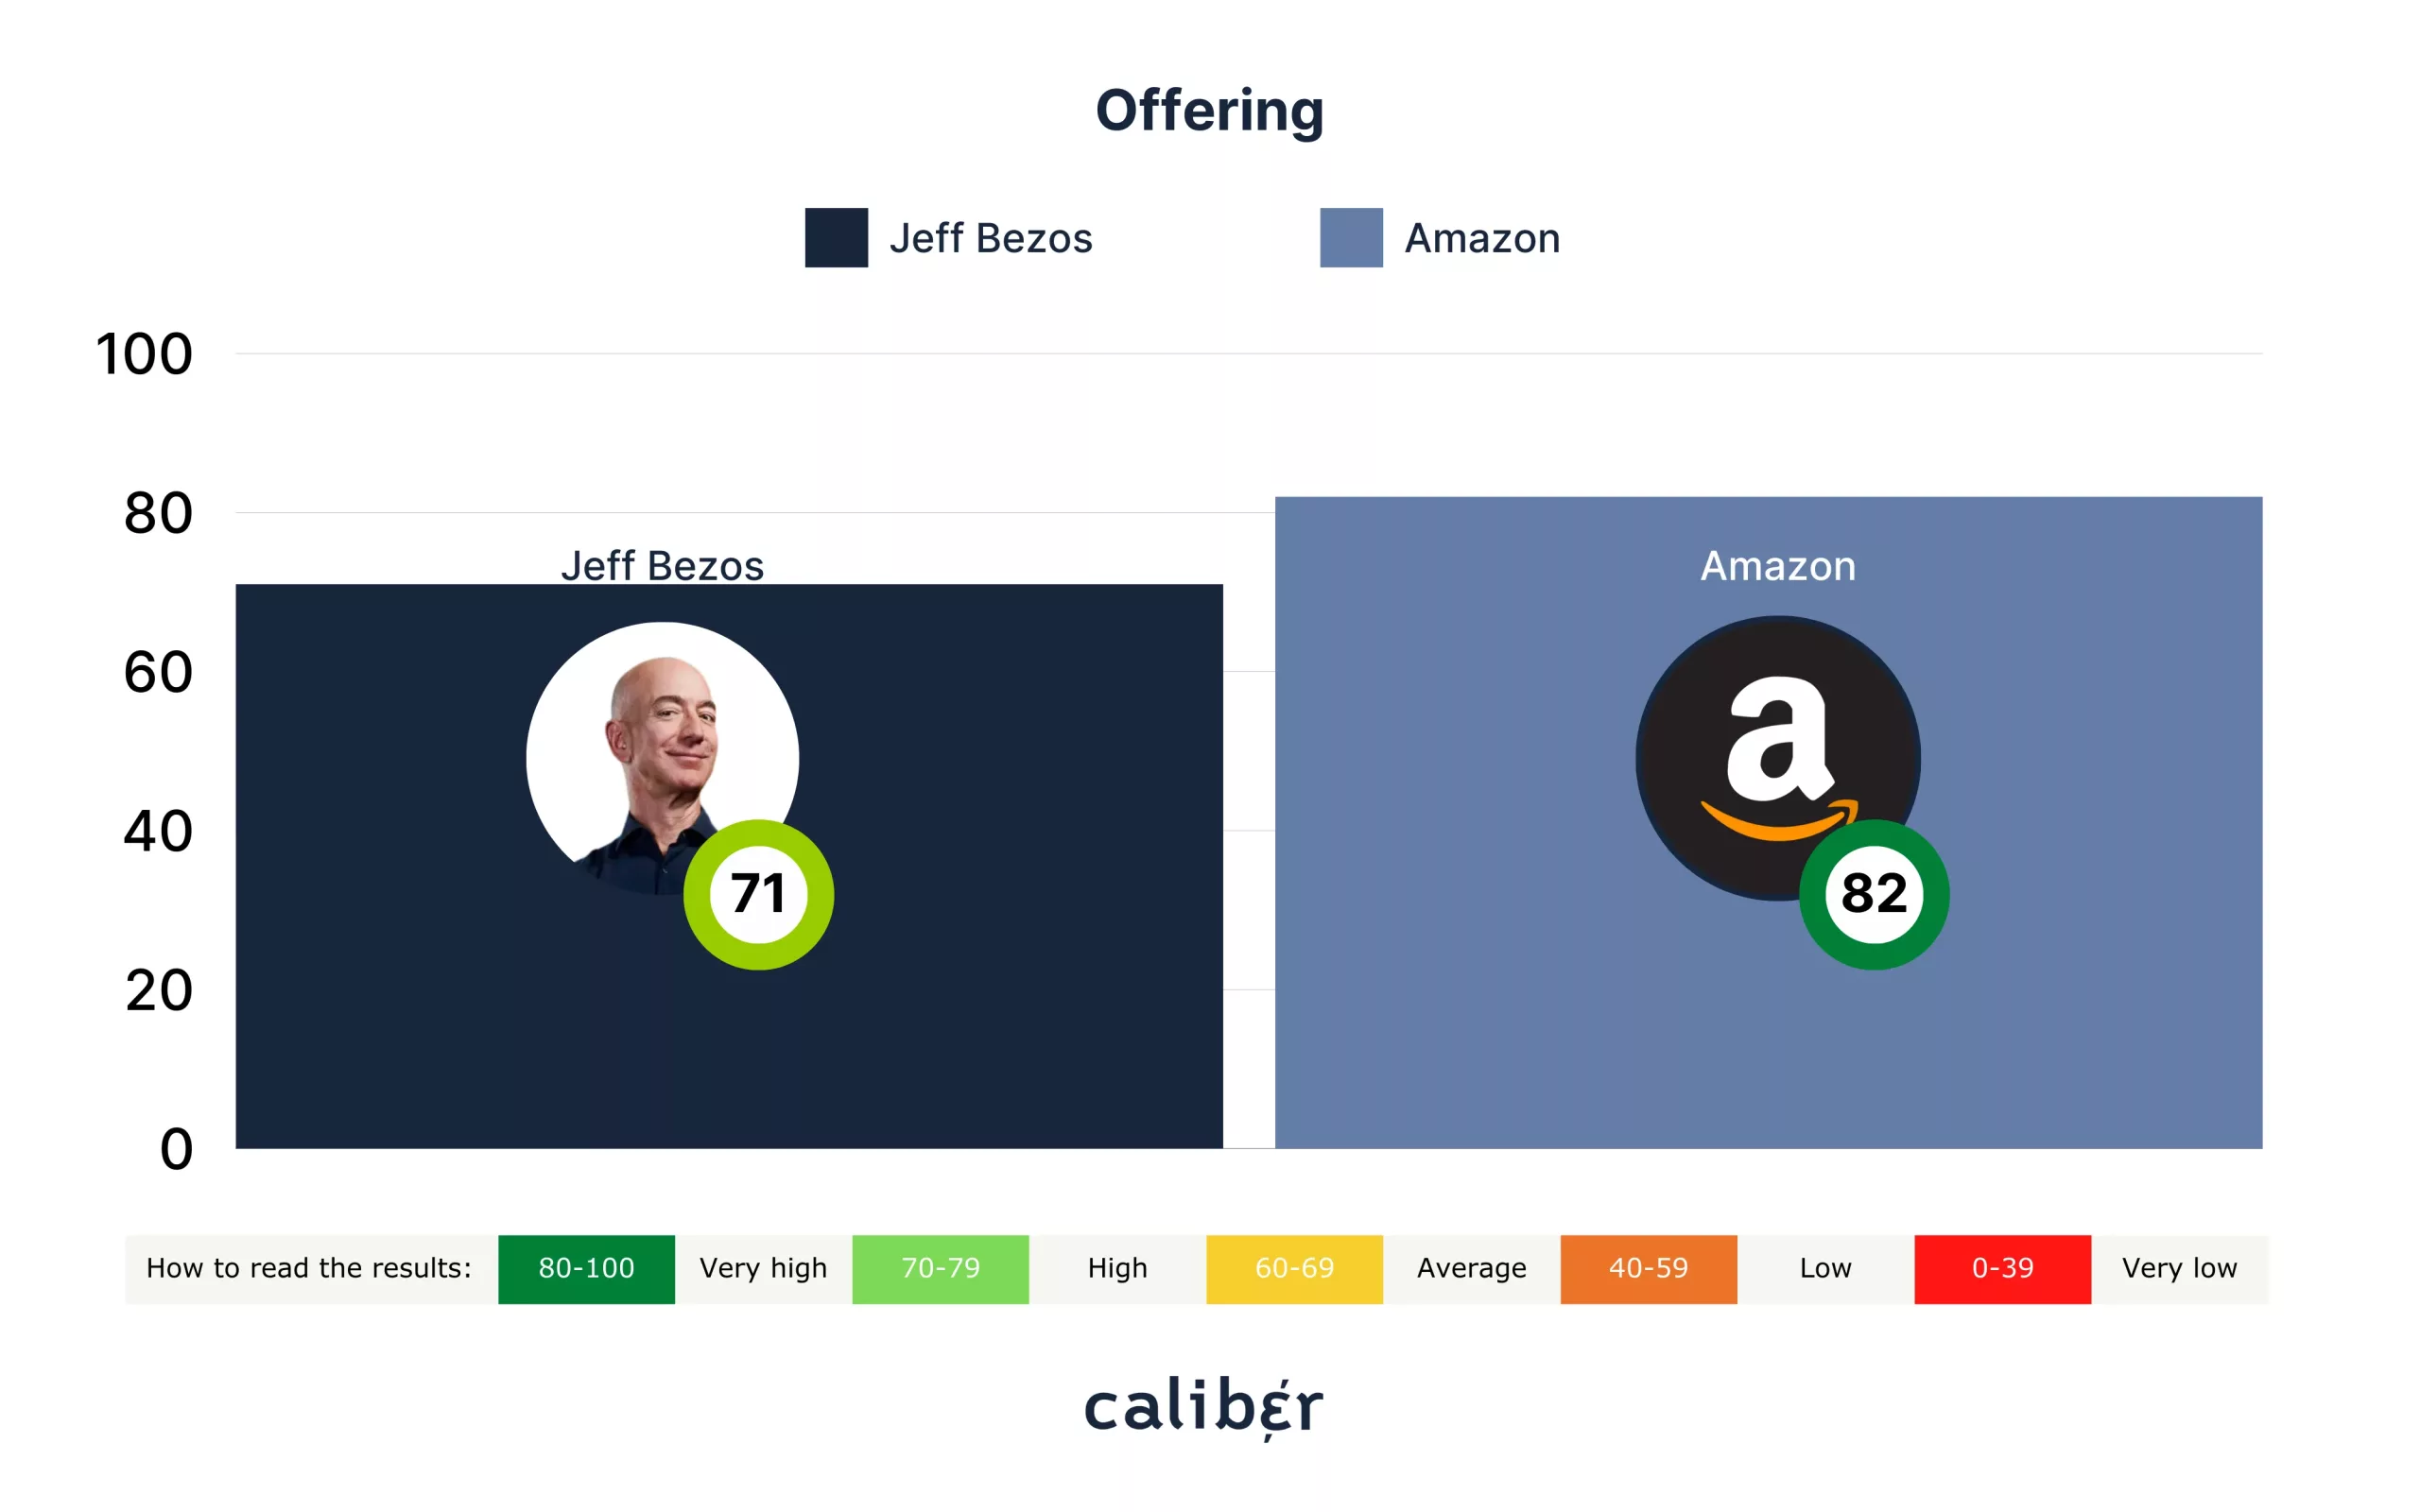 Jeff Bezos Offering Score